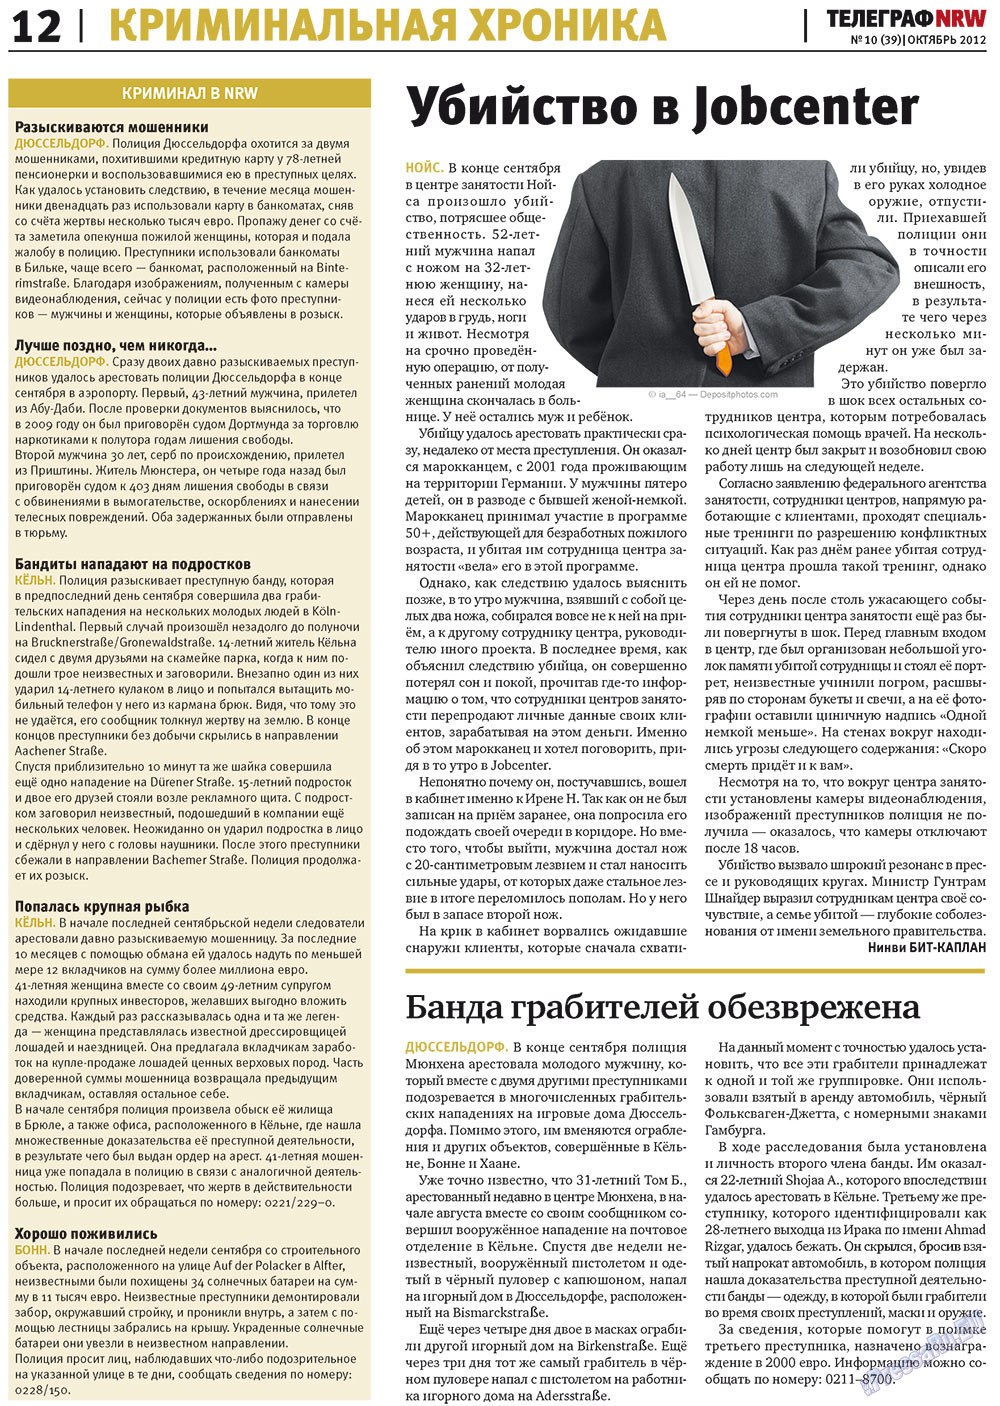 Телеграф NRW, газета. 2012 №10 стр.12